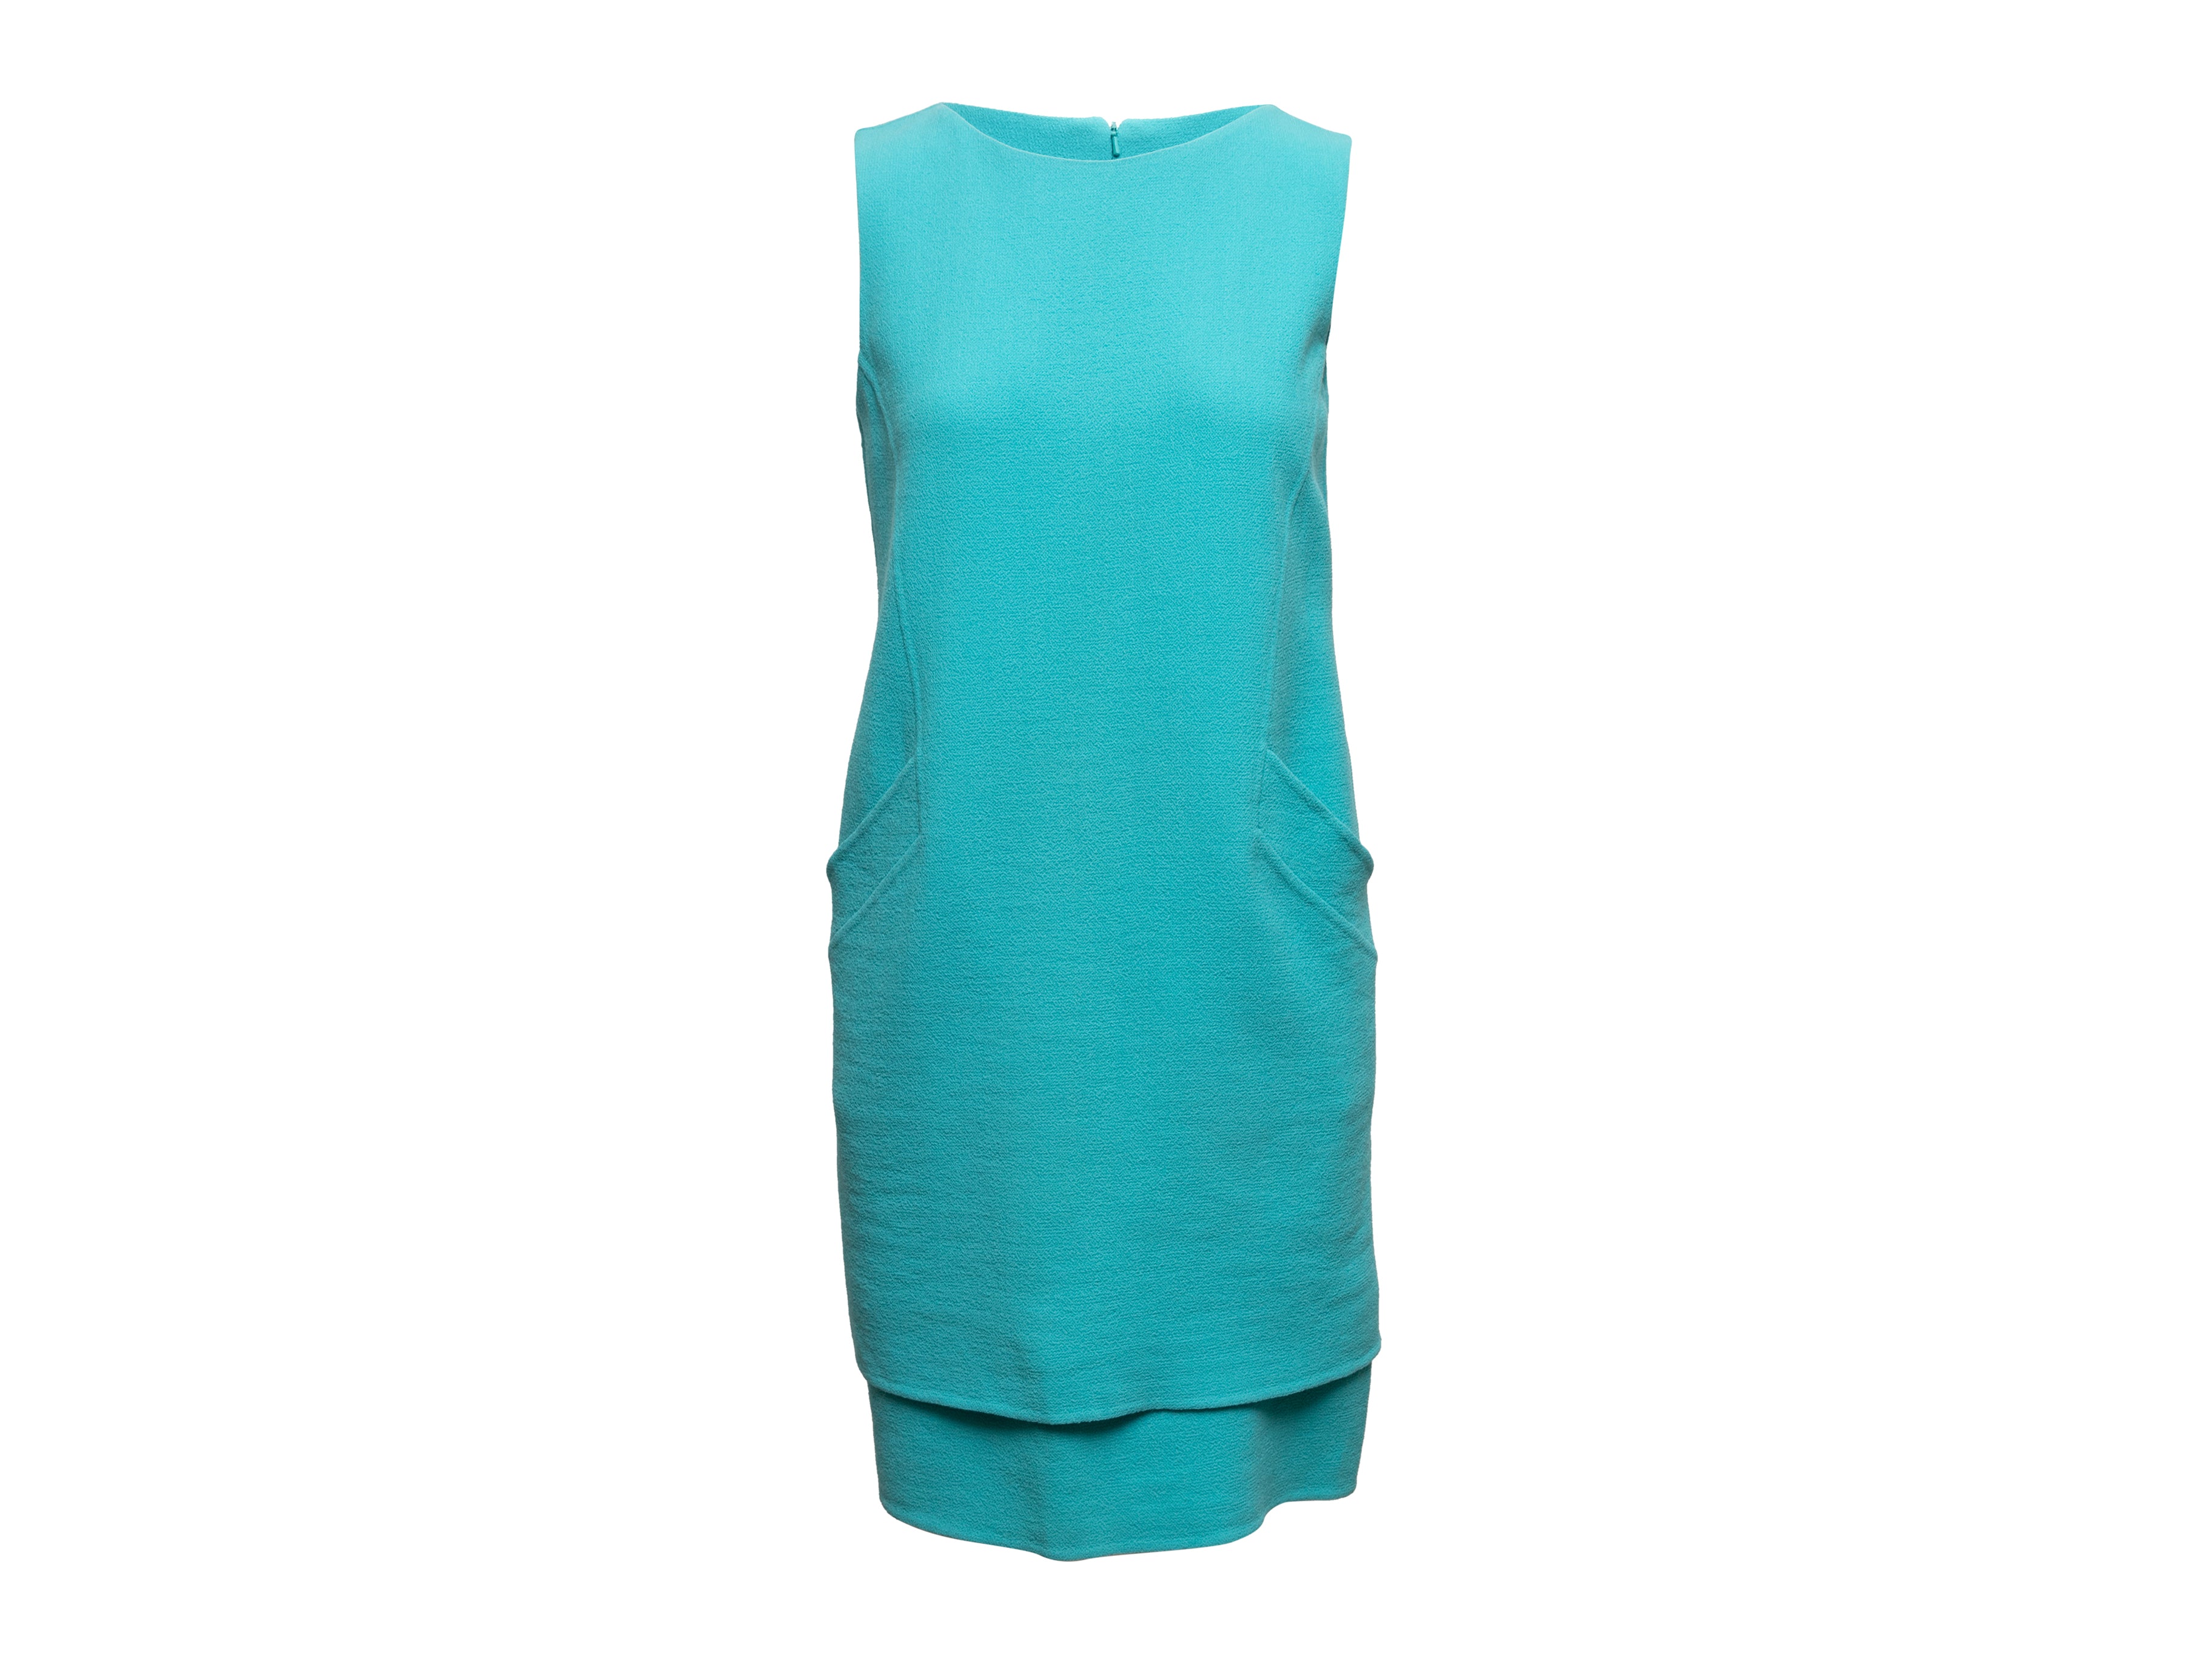 Turquoise Oscar de la Renta Resort 2015 Wool Dress Size US 4 - Designer Revival